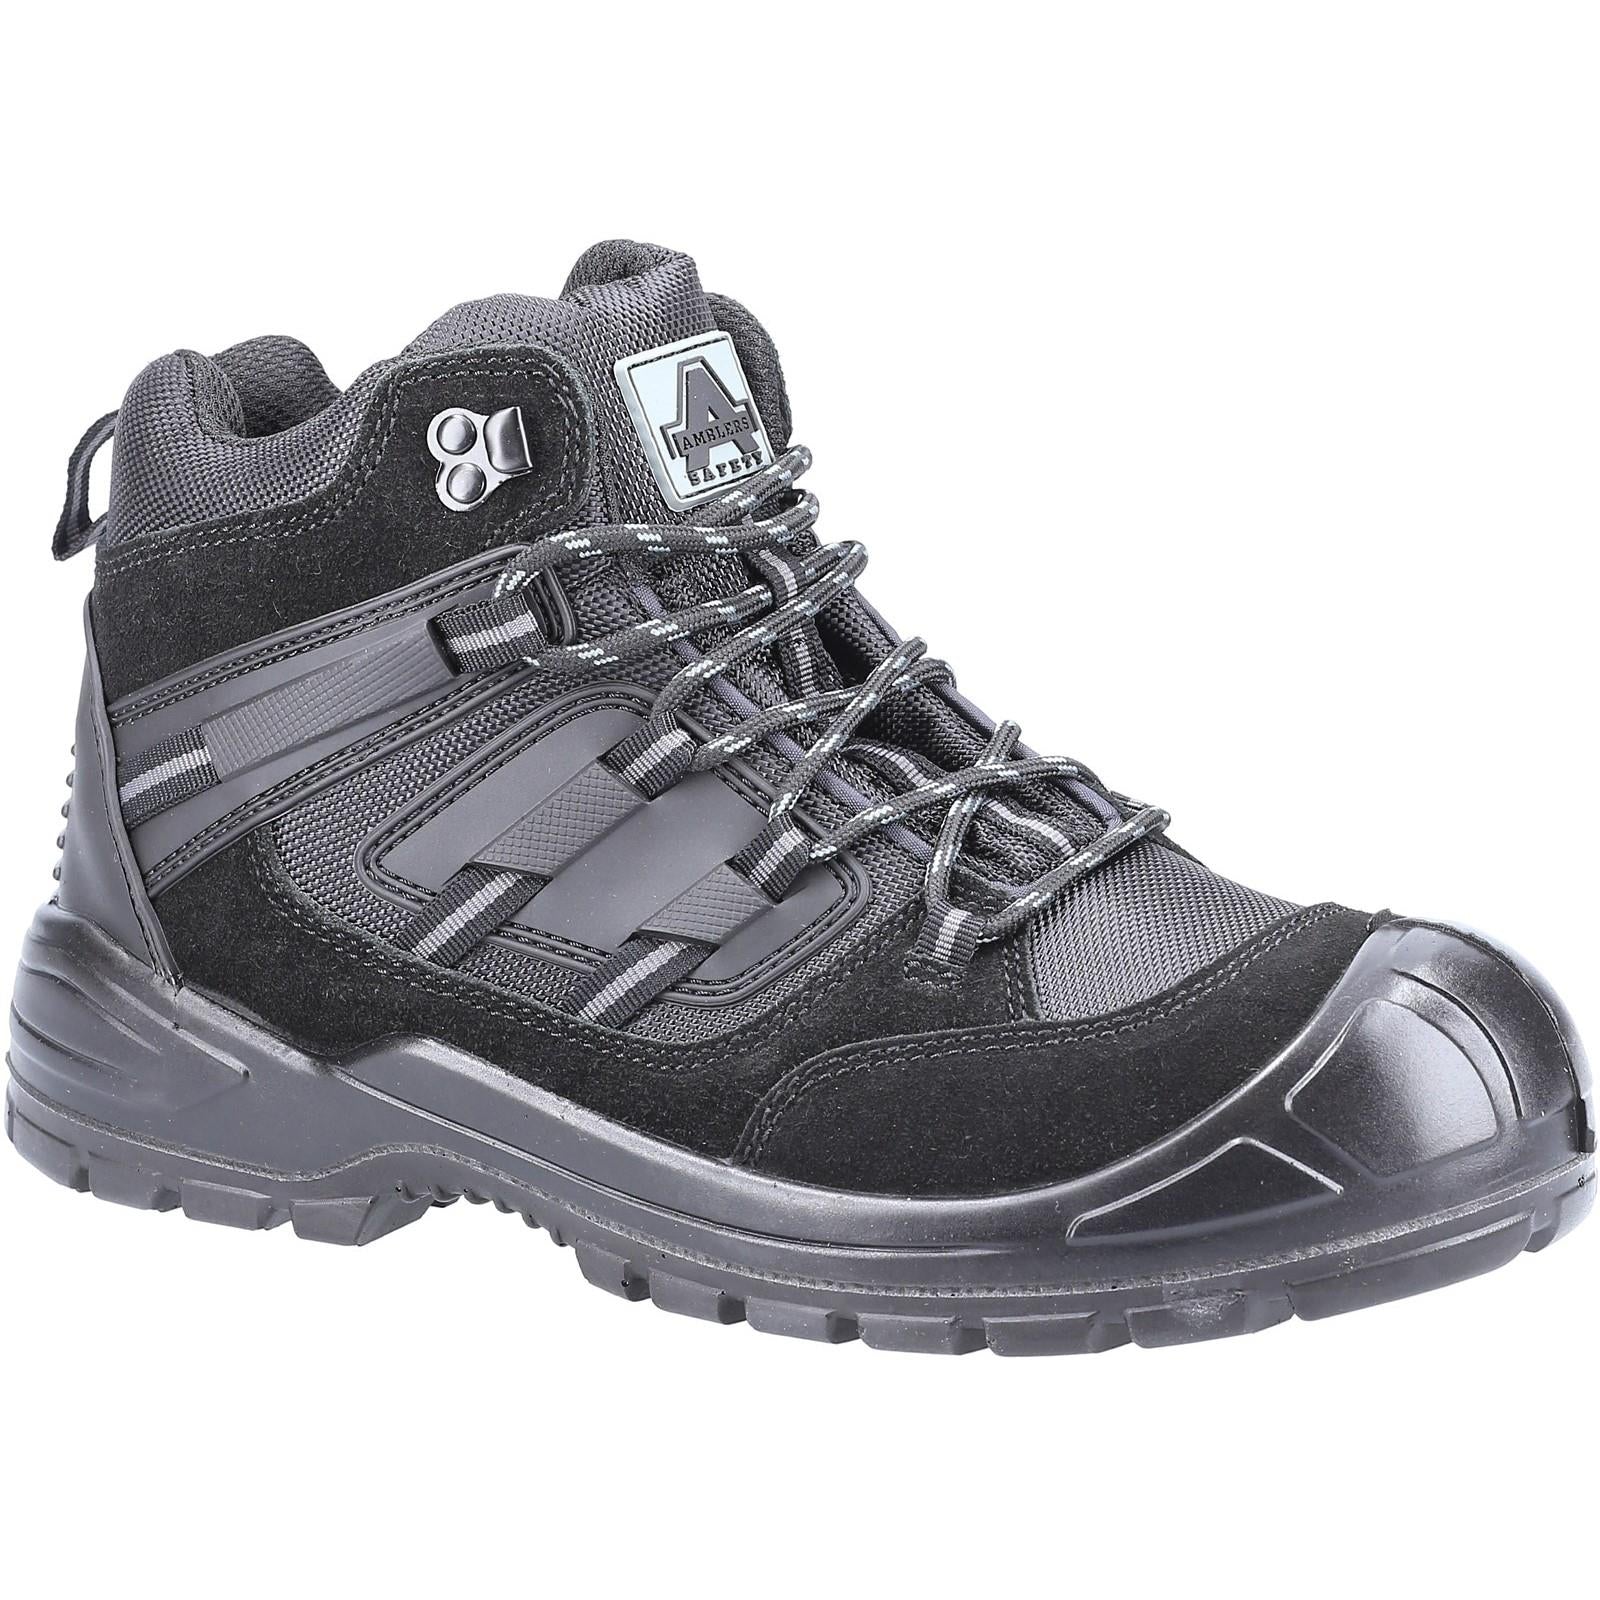 Amblers S1P black suede steel toe/midsole safety hiker work boot #AS257